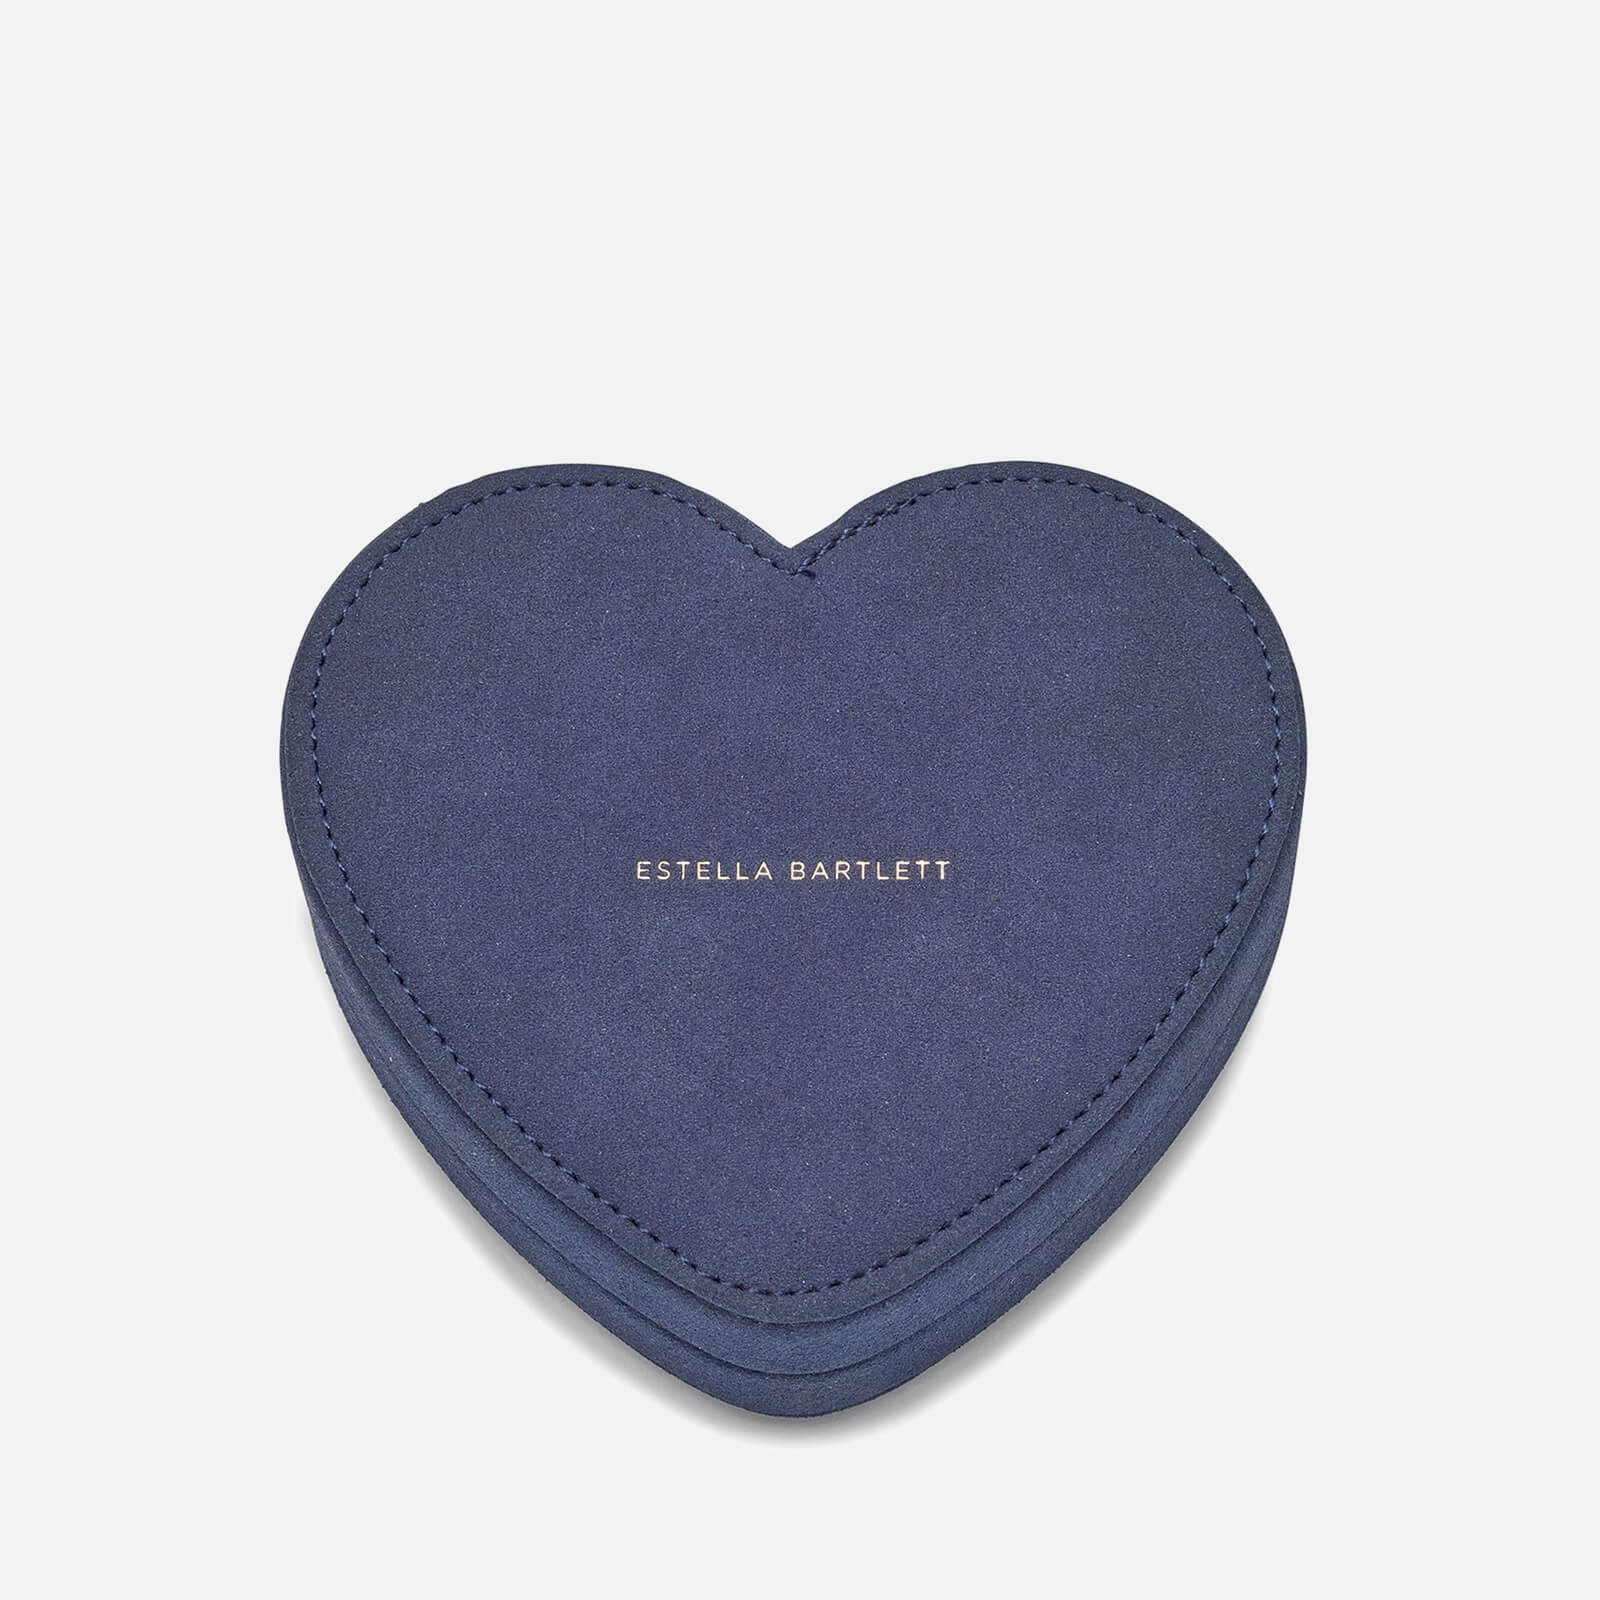 estella bartlett heart shaped jewellery box blau